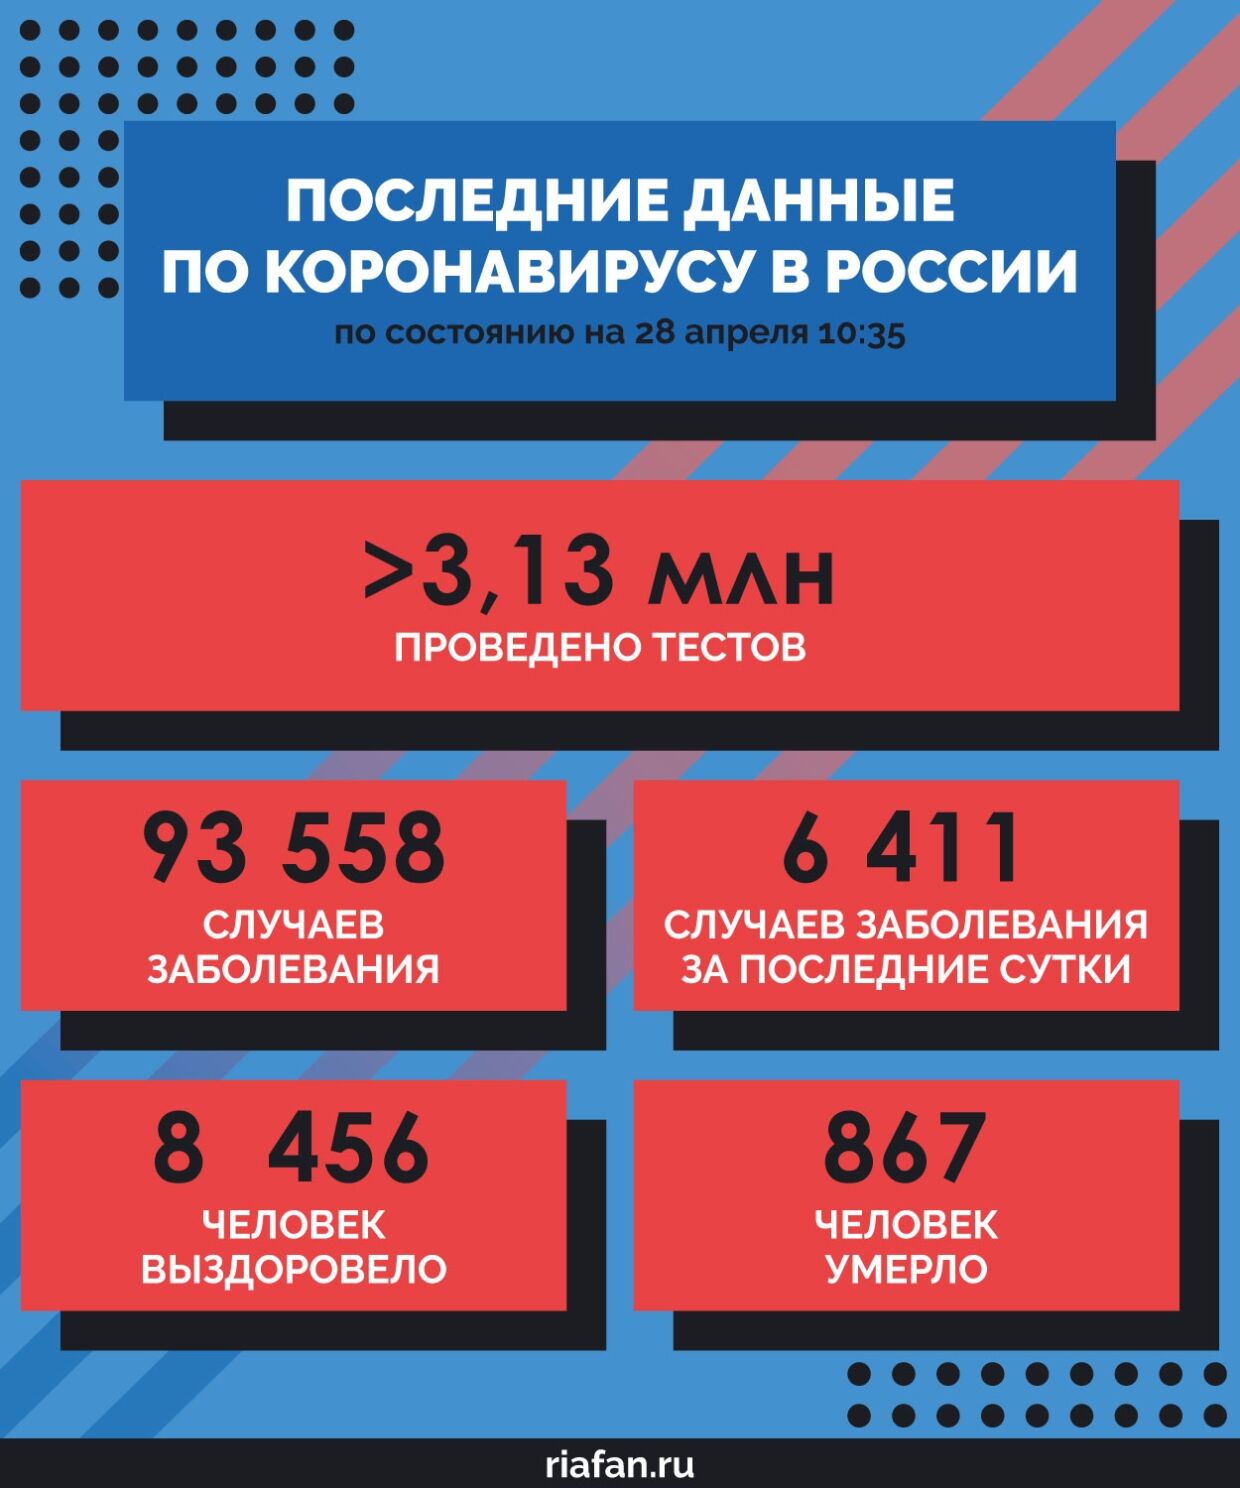 Попова сообщила о снижении темпов прироста пациентов с COVID-19 в РФ в 3,5 раза